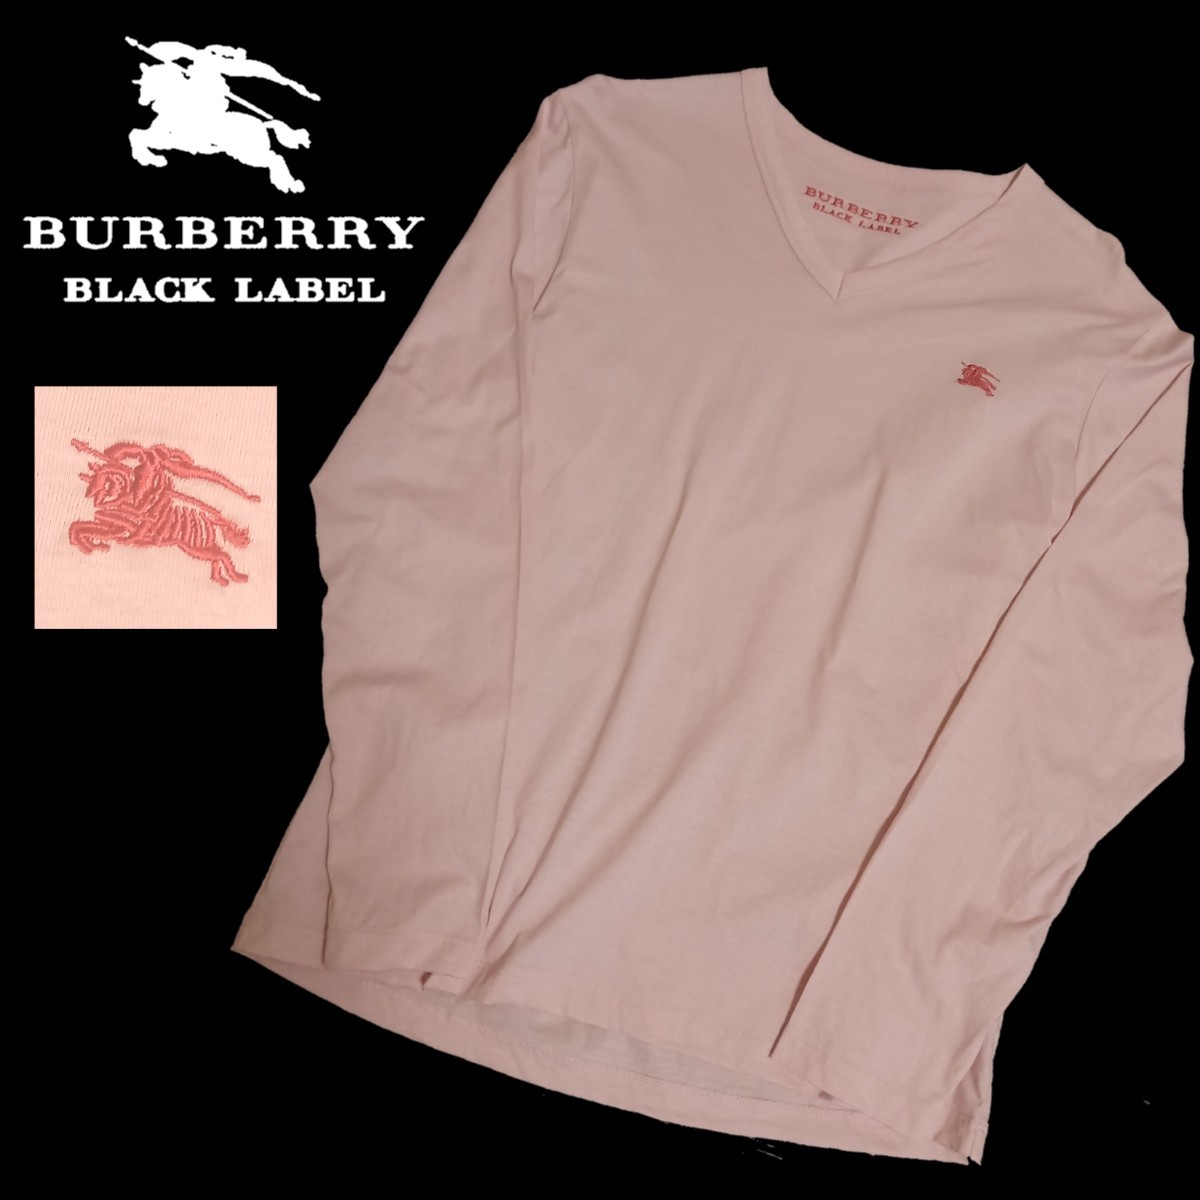 BURBERRYBLACKLABEL バーバリーブラックレーベル 未使用 長袖カットソー ピンク ホースロゴ刺繍 サイズ2 M相当 三陽商会 正規品